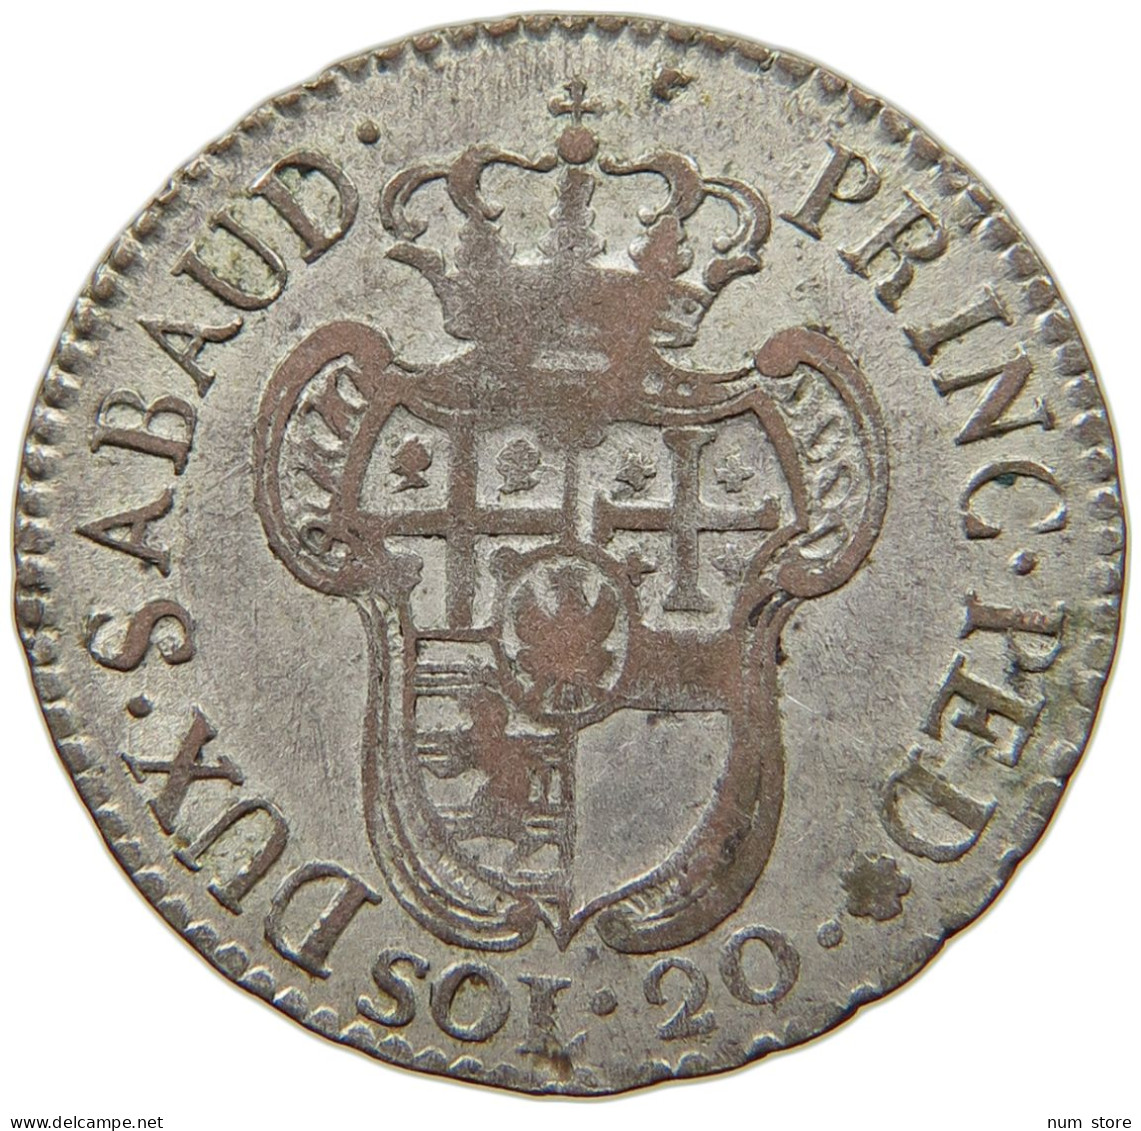 ITALIEN-SARDINIEN 20 SOLDI 1796 VITTORIO AMADEO III., 1773-1796. #MA 008541 - Piémont-Sardaigne-Savoie Italienne